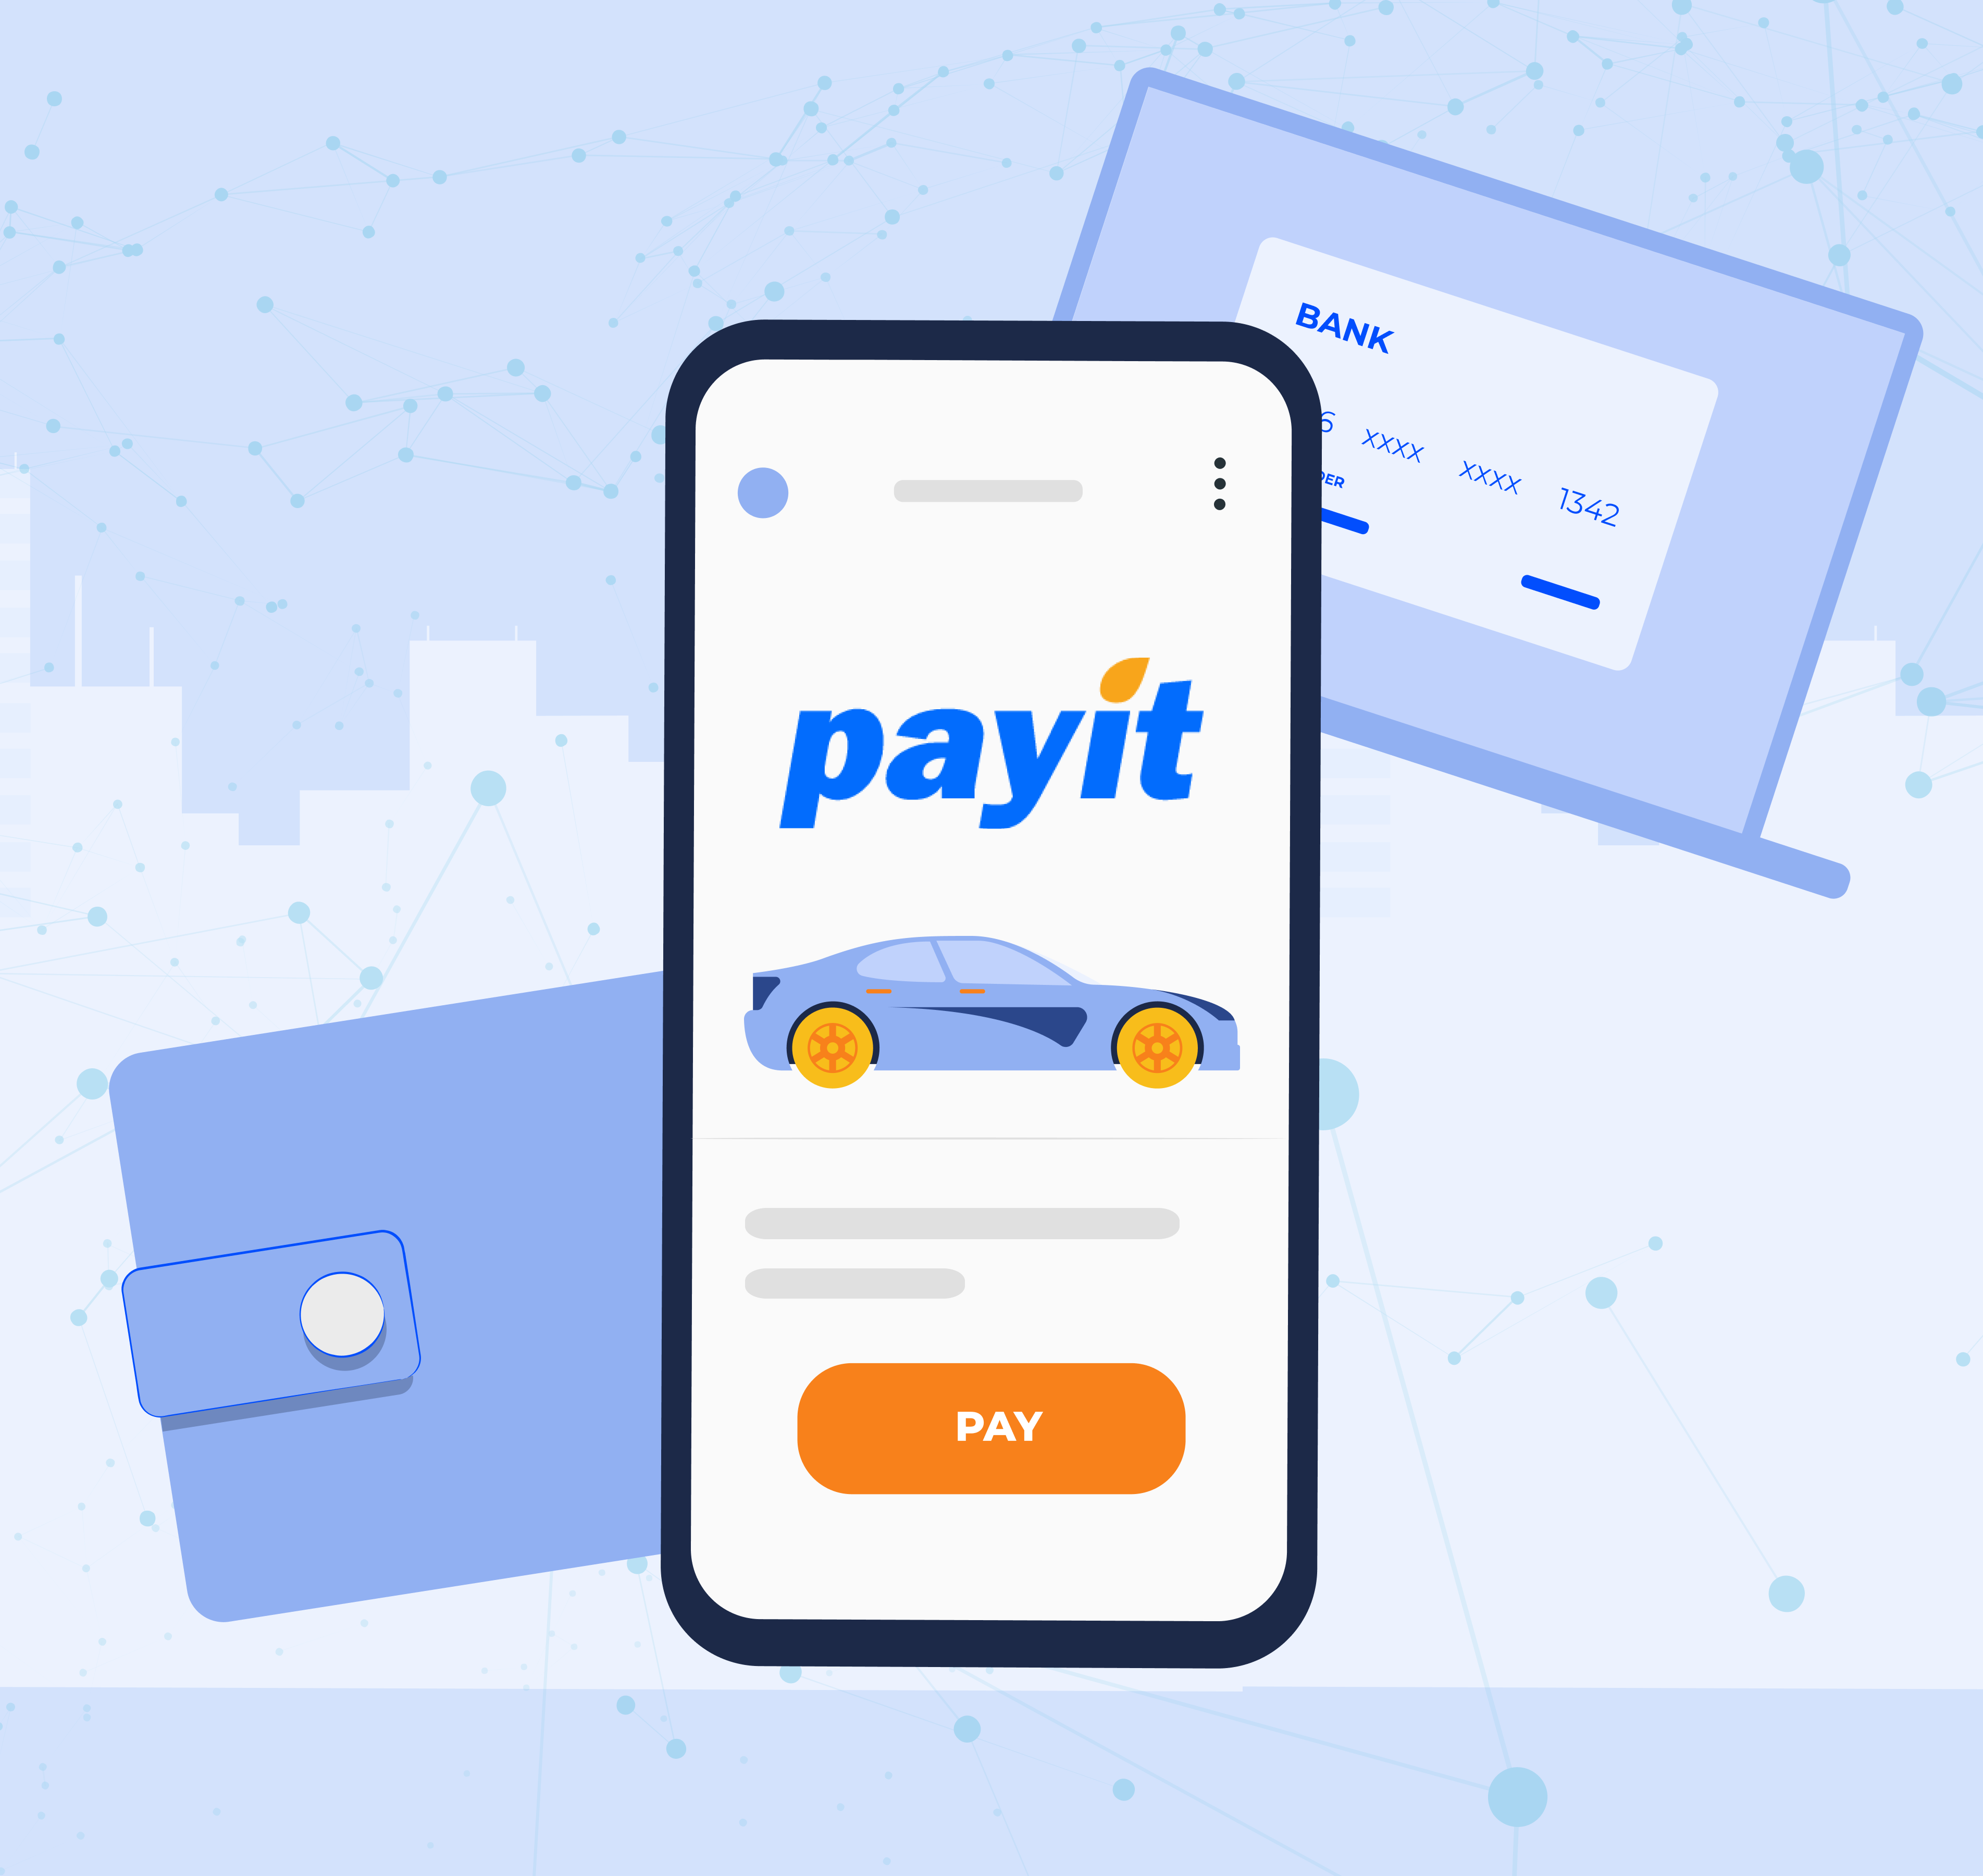 PayIt GovTech platform enables online DMV services and payments